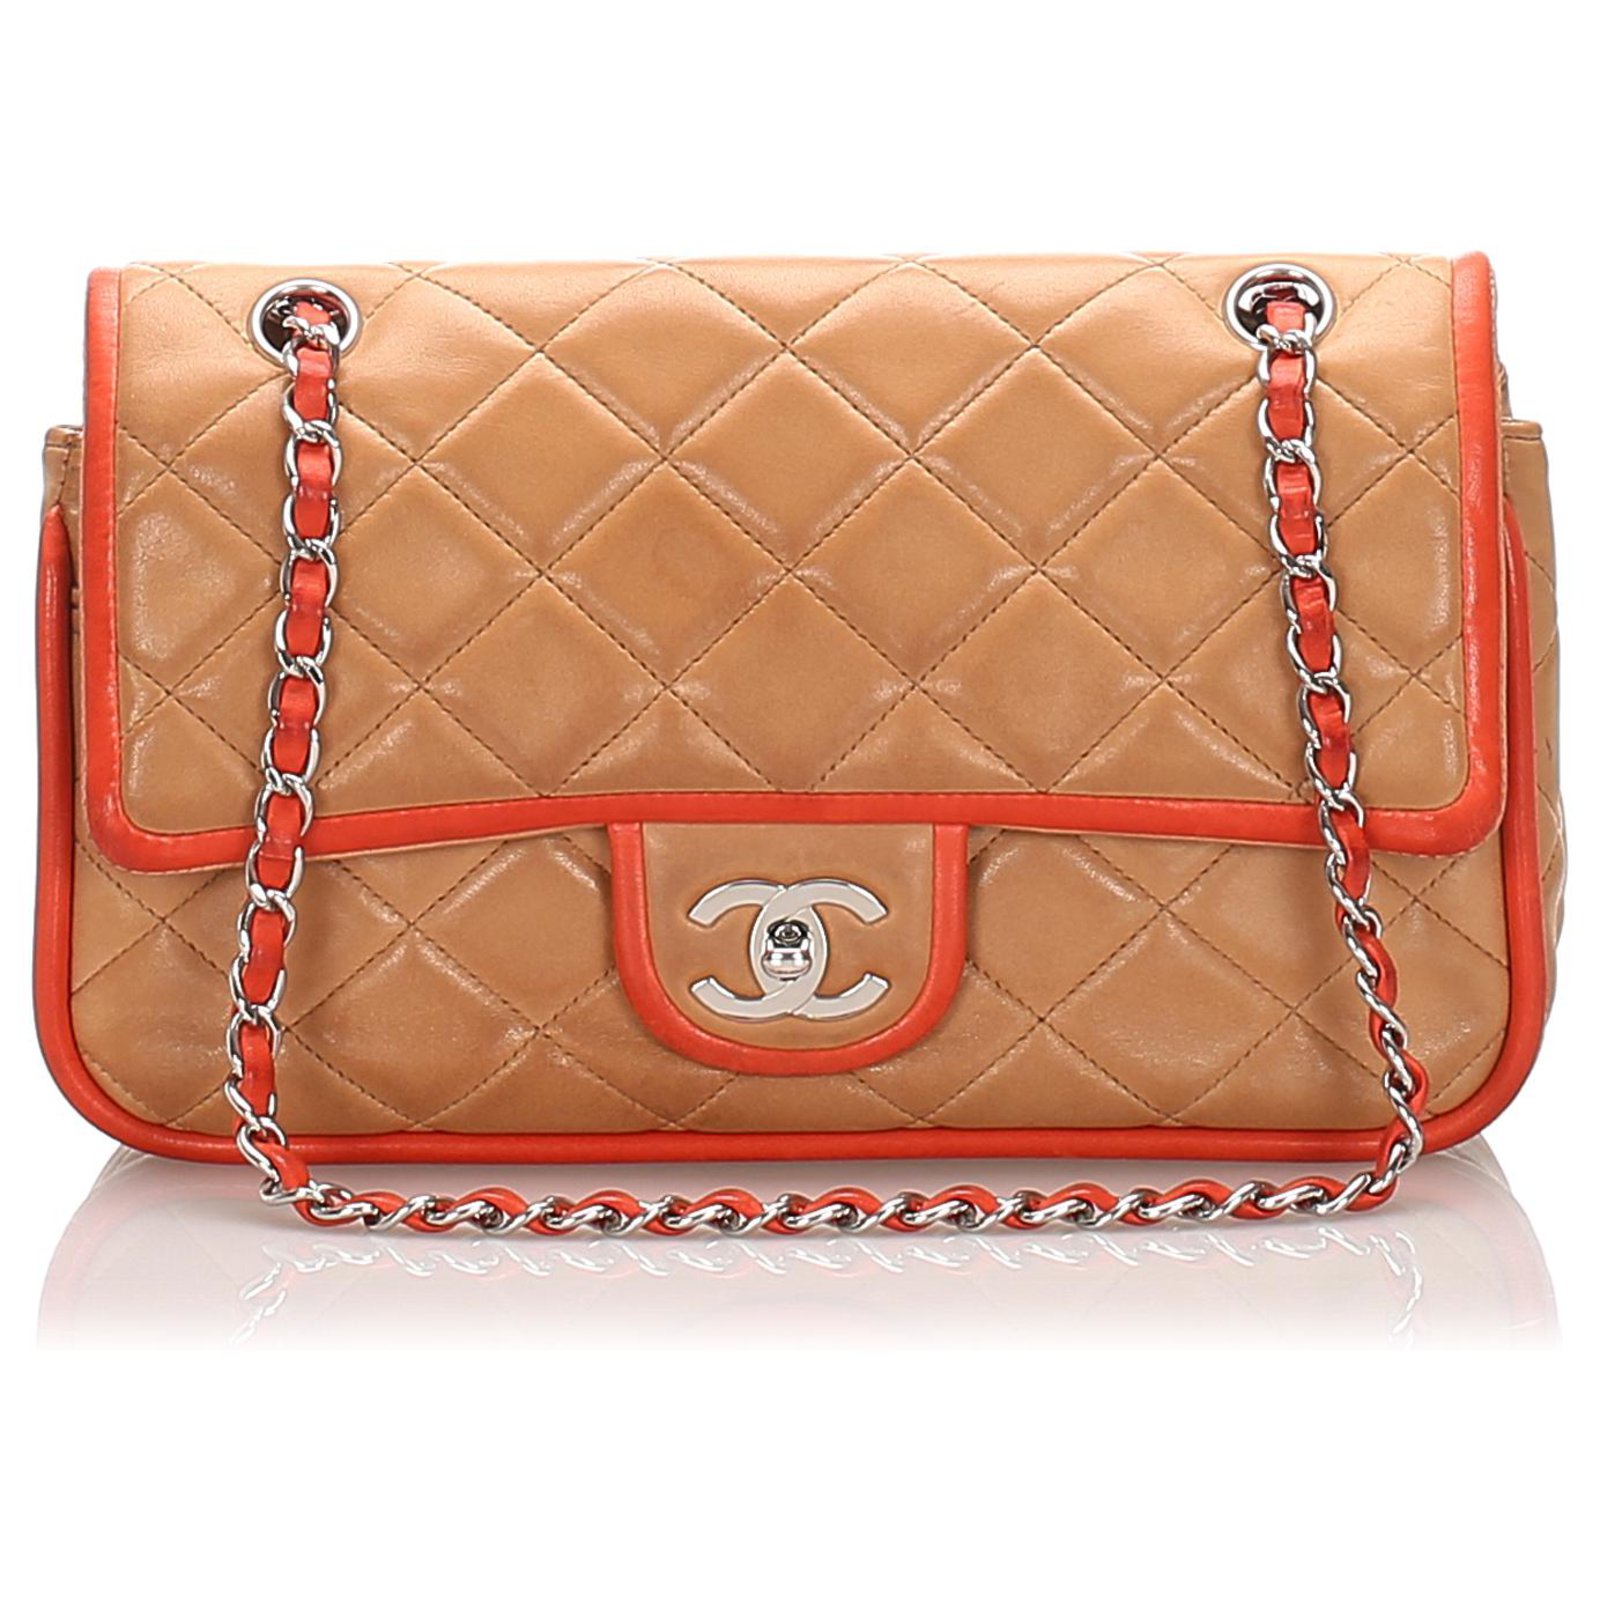 Chanel Brown Medium Lambskin lined Flap Bag Beige Orange Leather